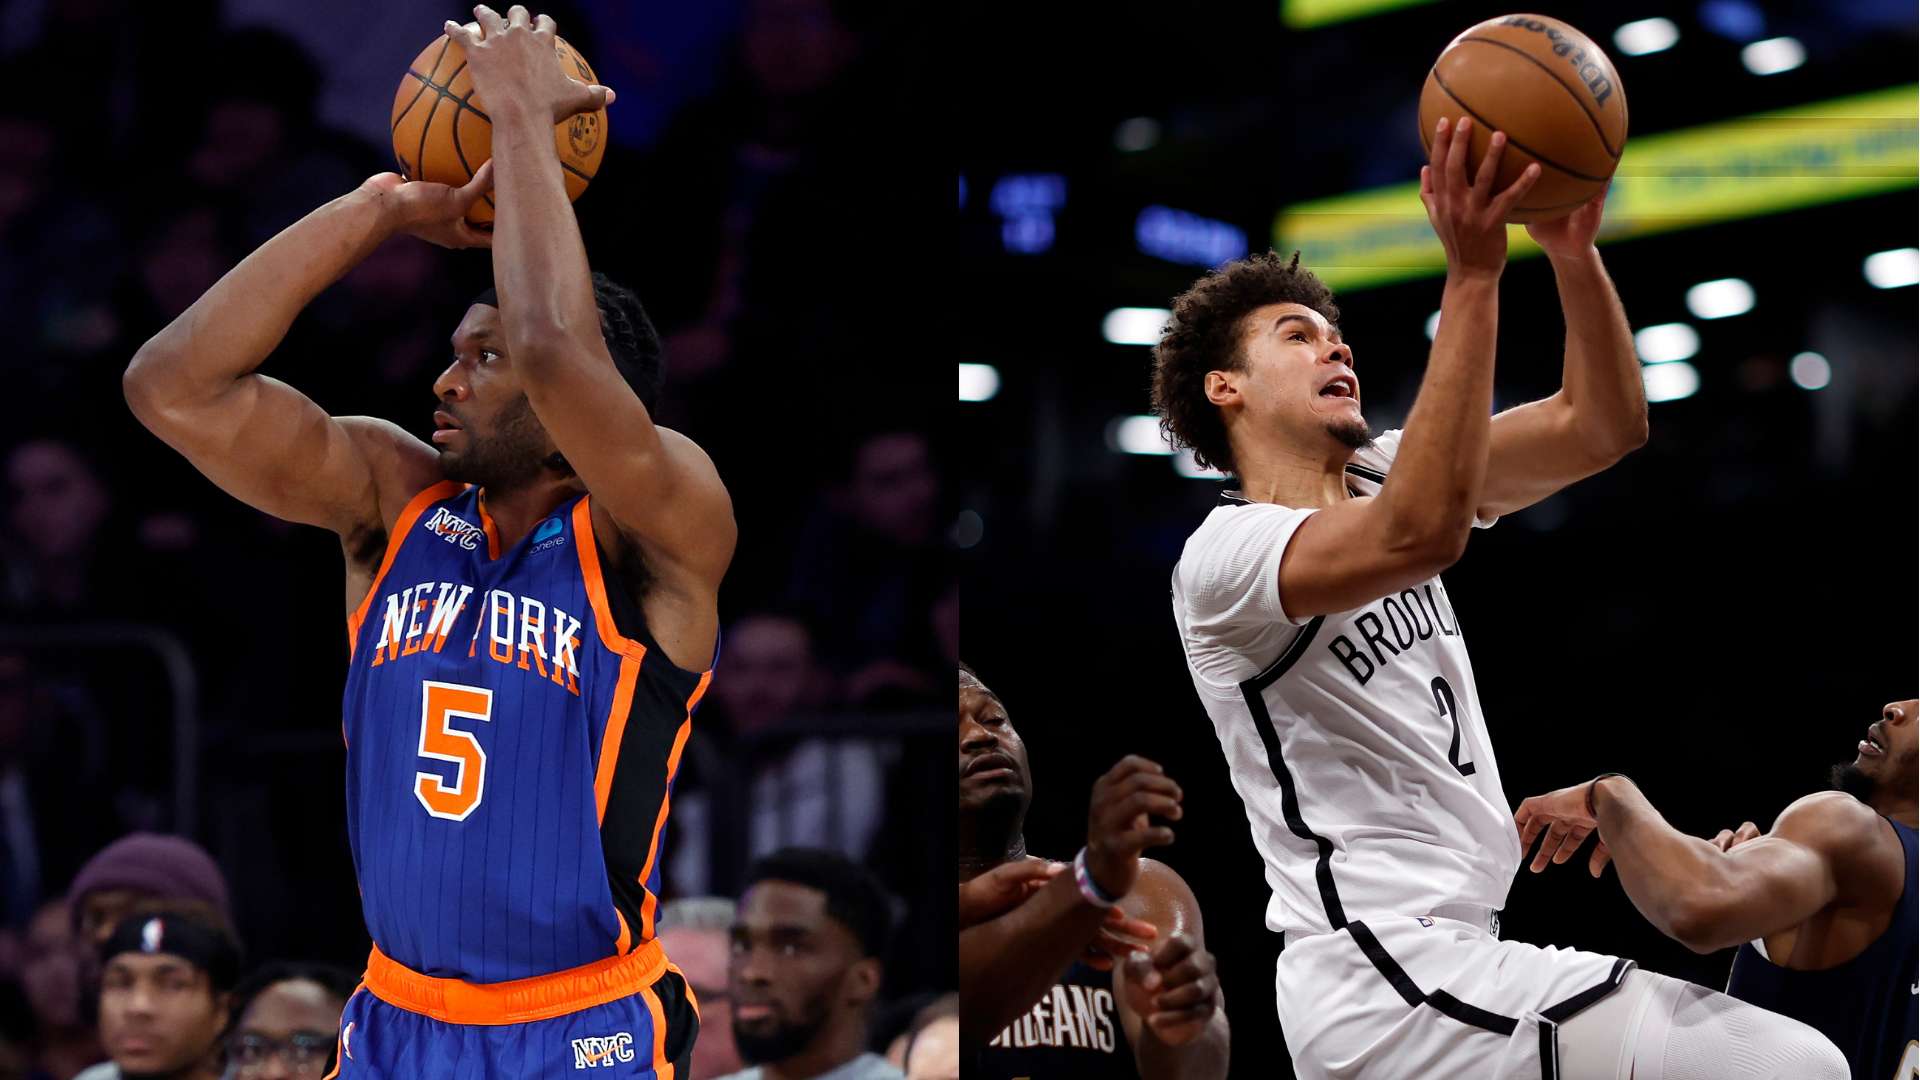 New York Knicks vs Brooklyn Nets NBA game